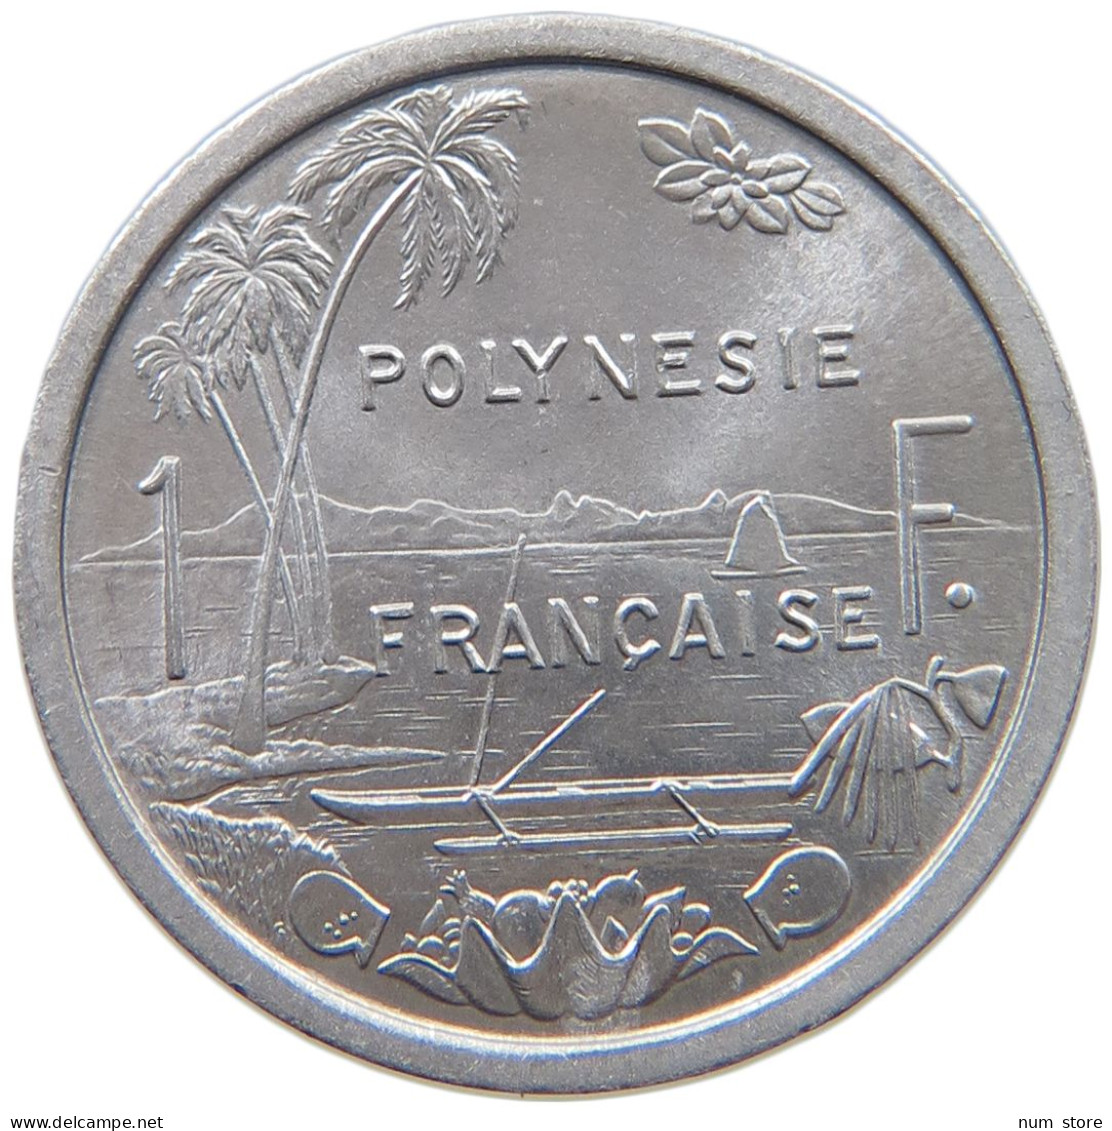 POLYNESIA FRANC 1965  #c035 0385 - Französisch-Polynesien